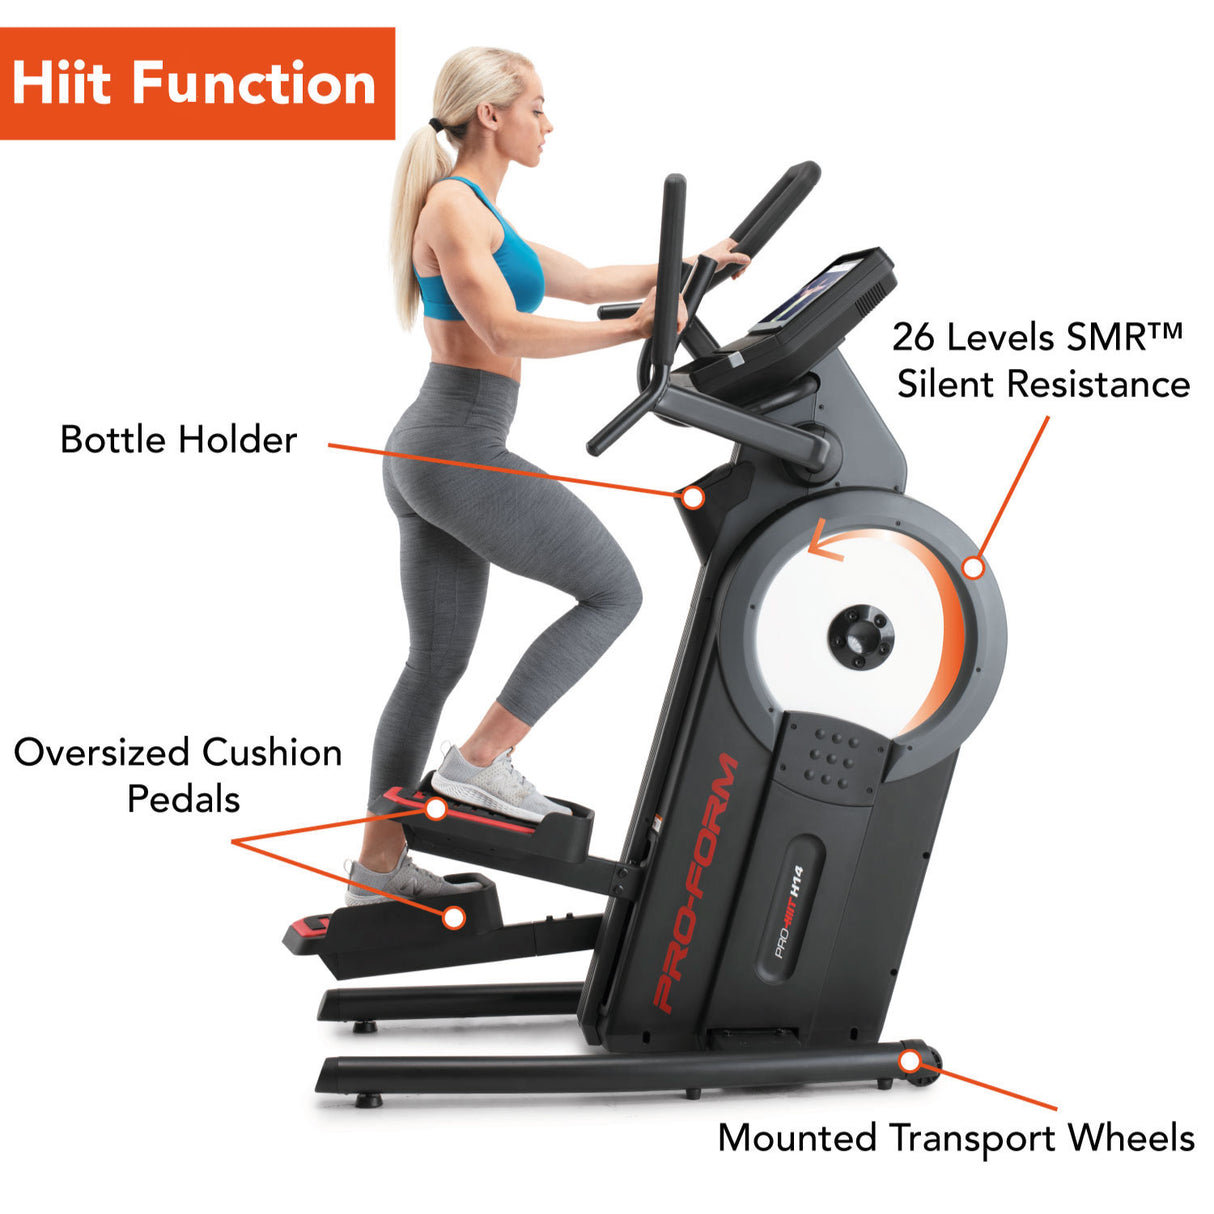 Cardio HIIT Trainer Features